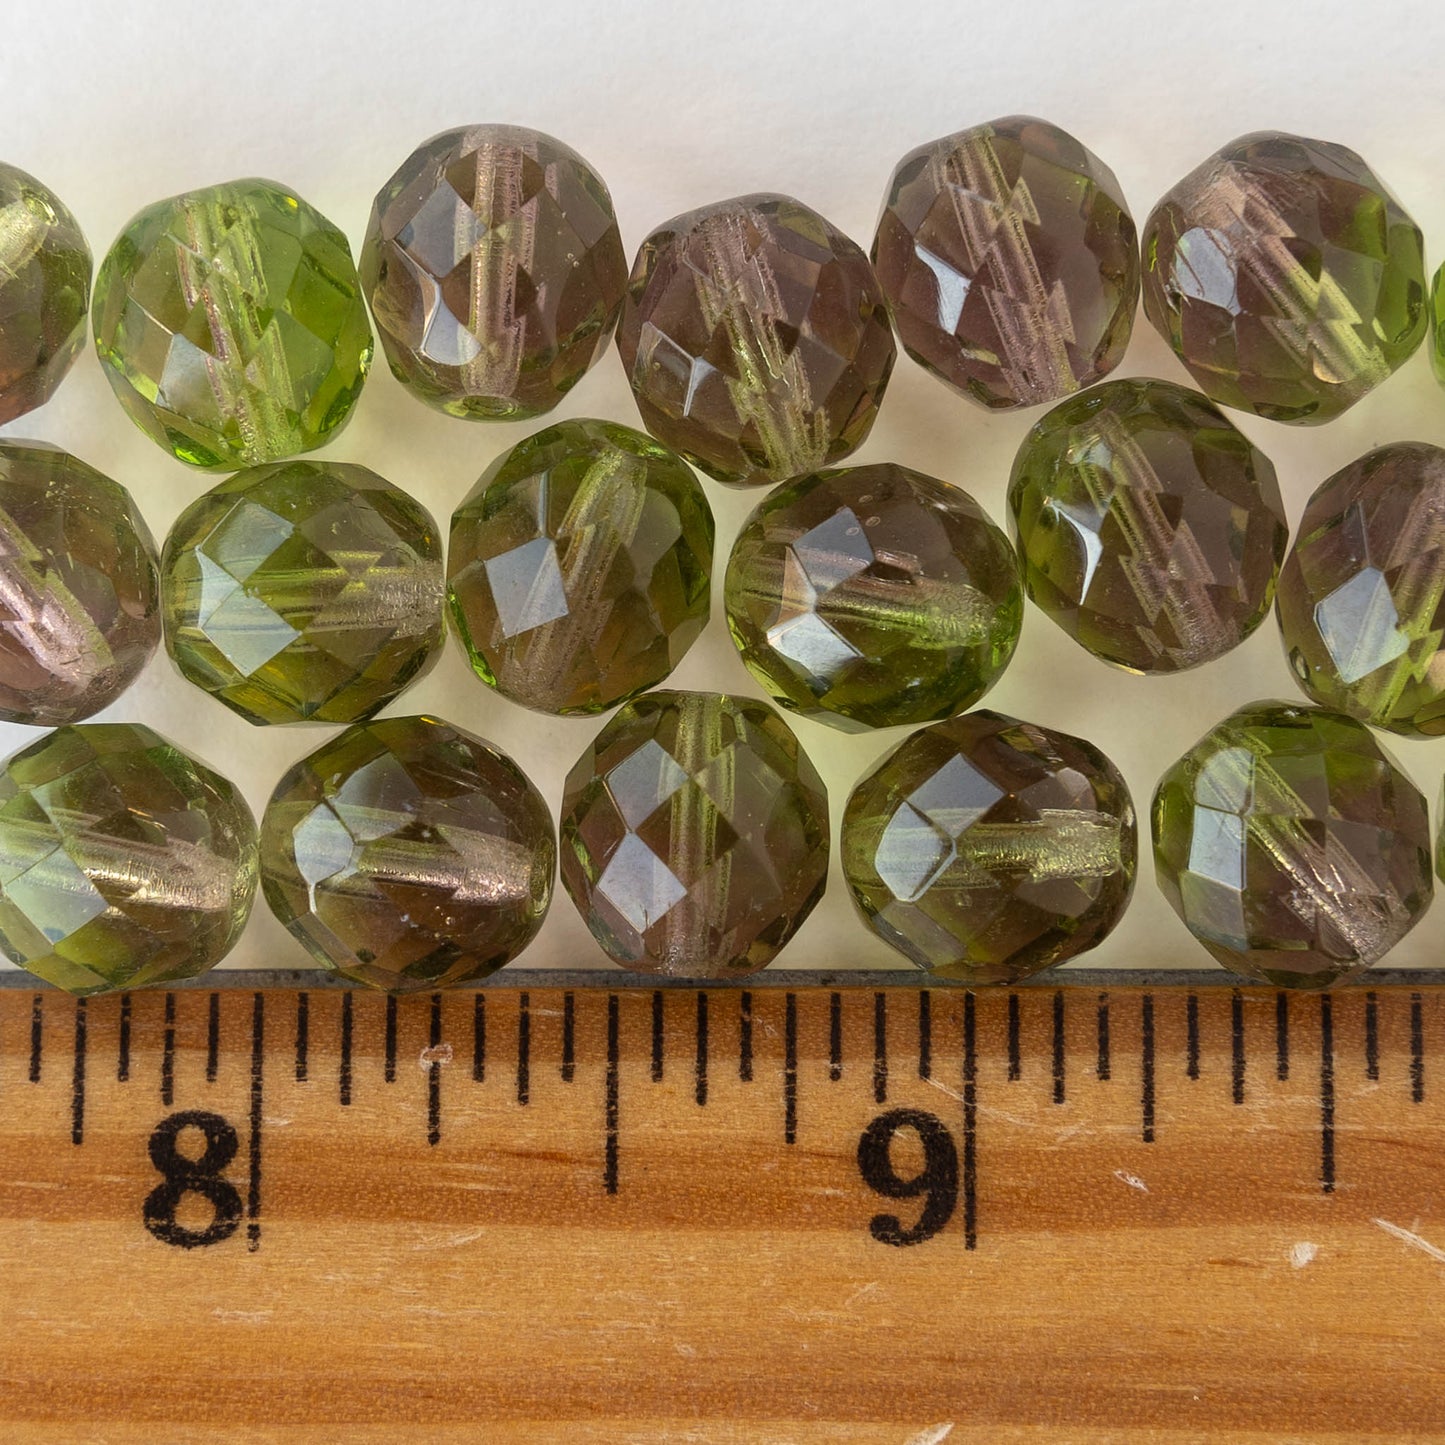 10mm Round Glass Beads - Olivine Amethyst Mix - 10 Beads